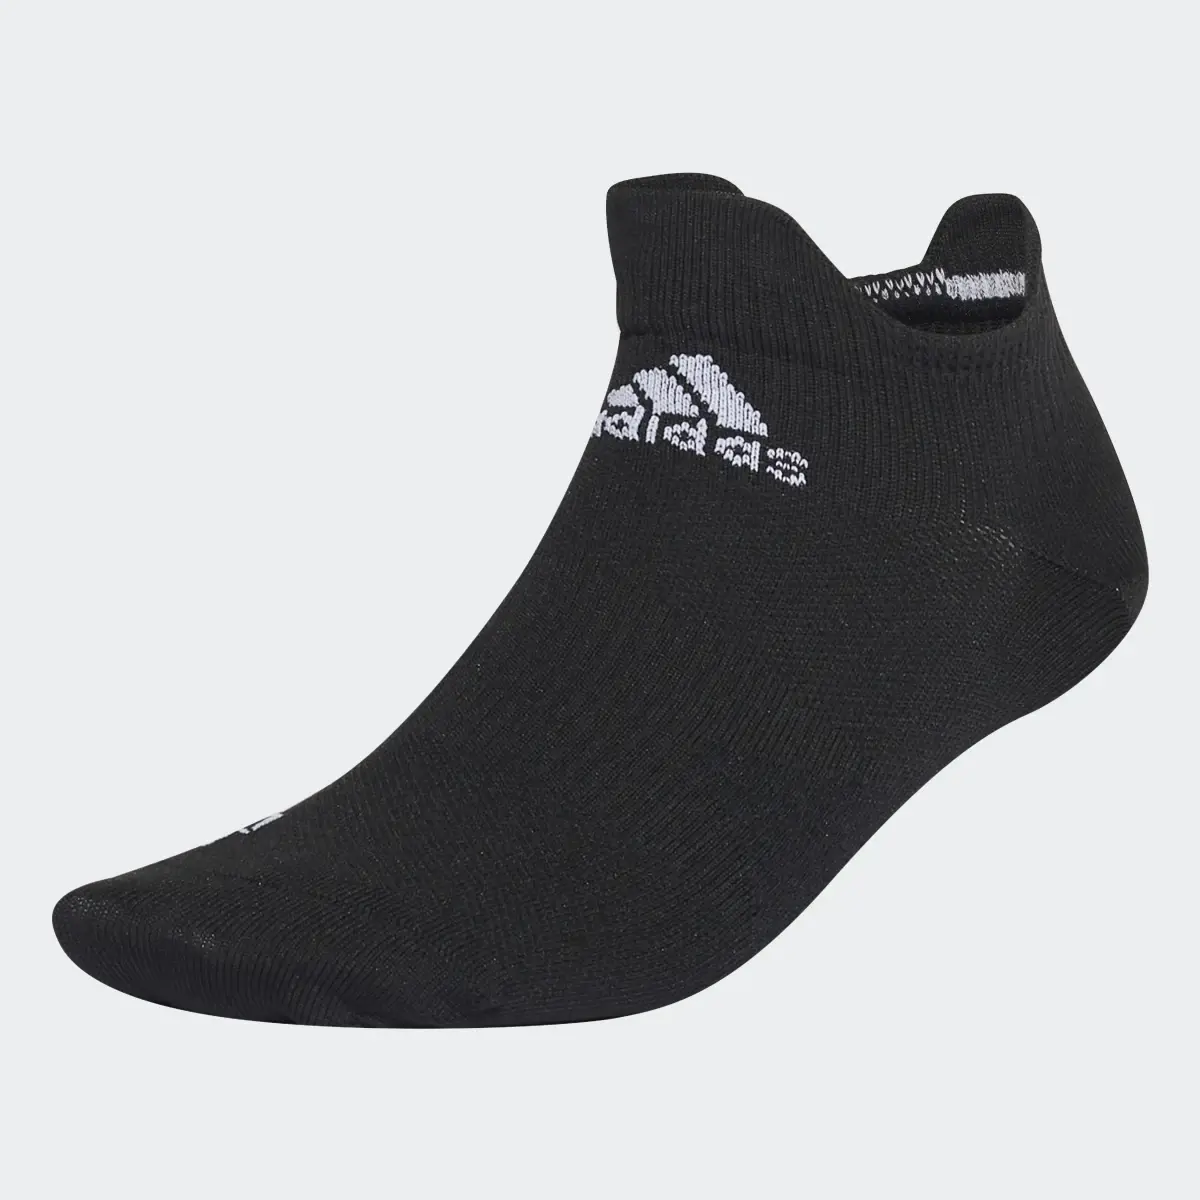 Adidas LOW-CUT RUNNING SOCKS. 2